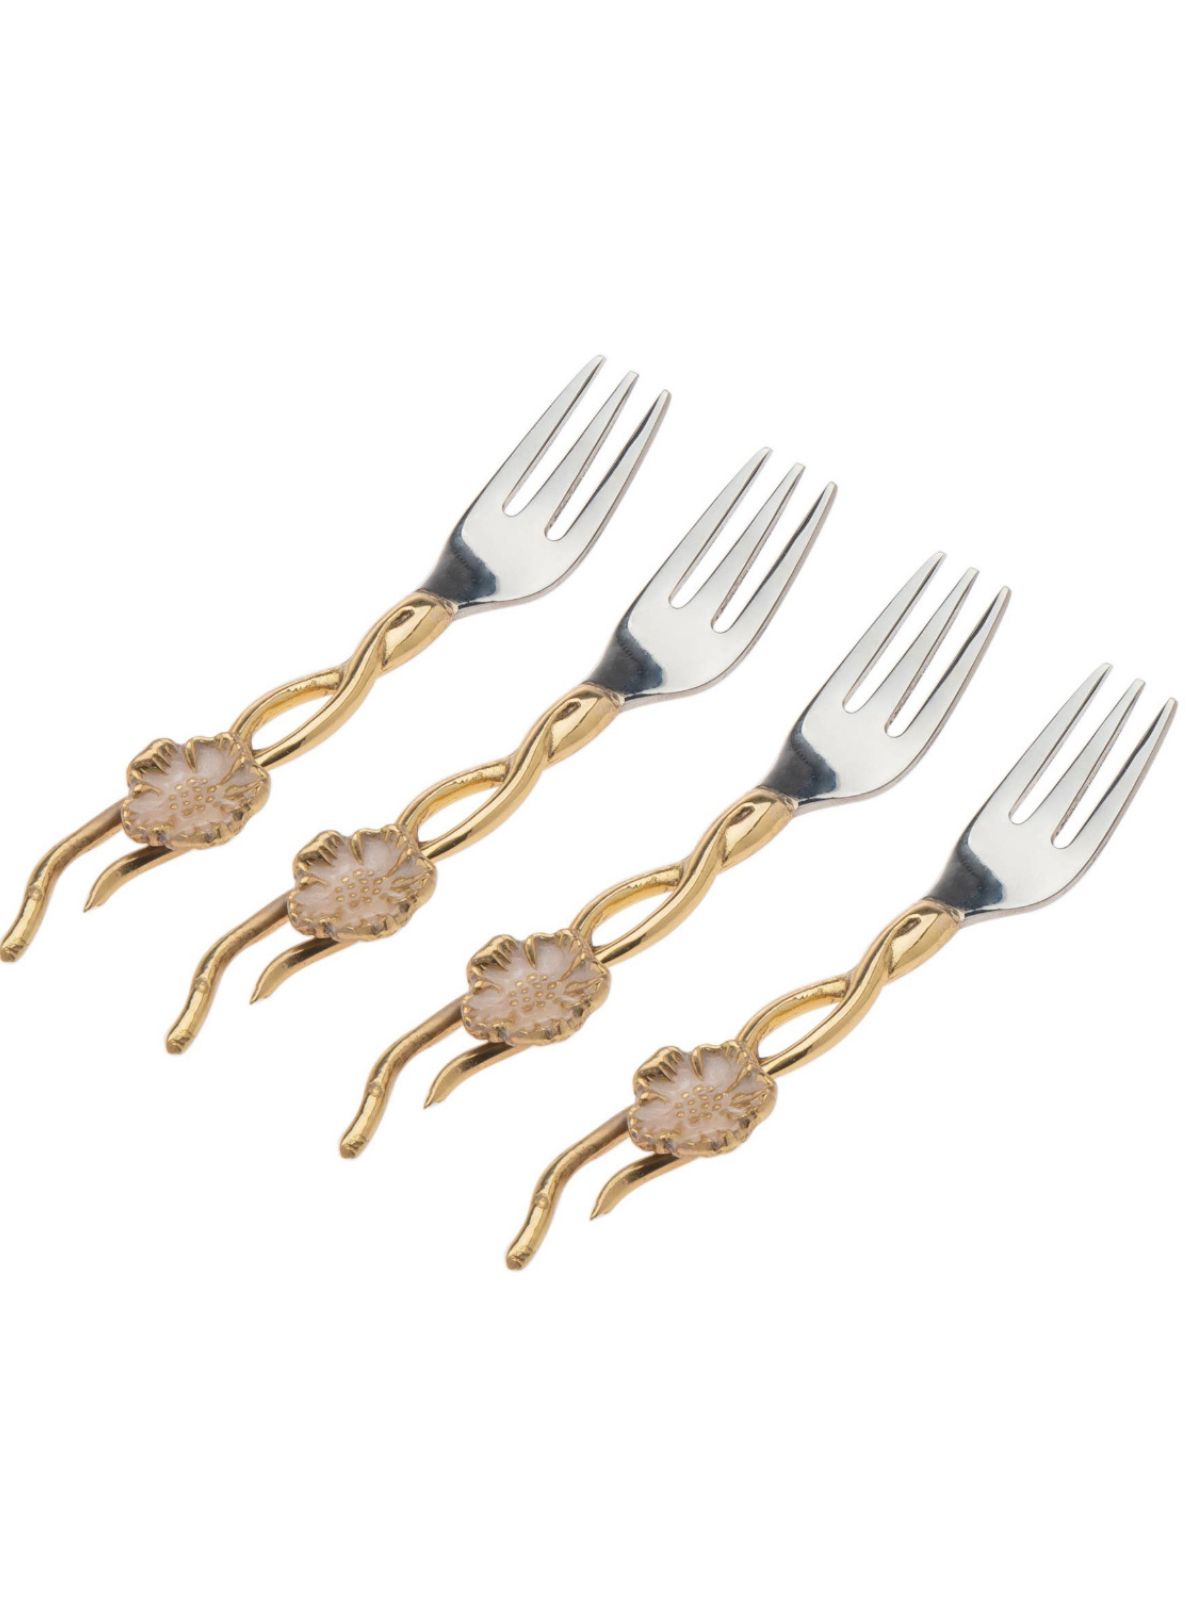 Stainless Steel Dessert Forks with Gold Flower Design handles.